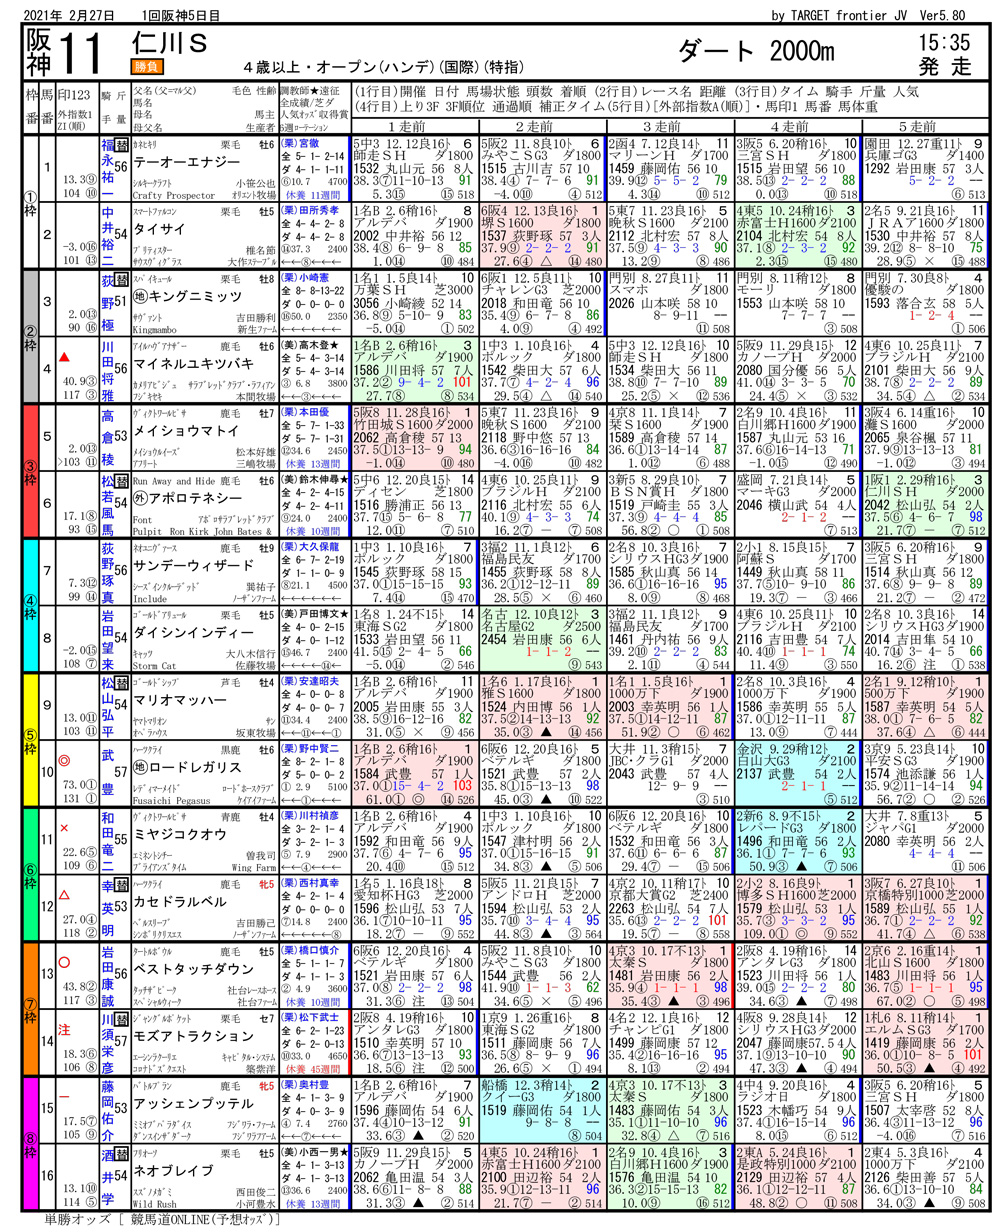 2021年02月27日開催 阪神11R 仁川ステークス 電脳競馬新聞 3連単107,870円馬券的中